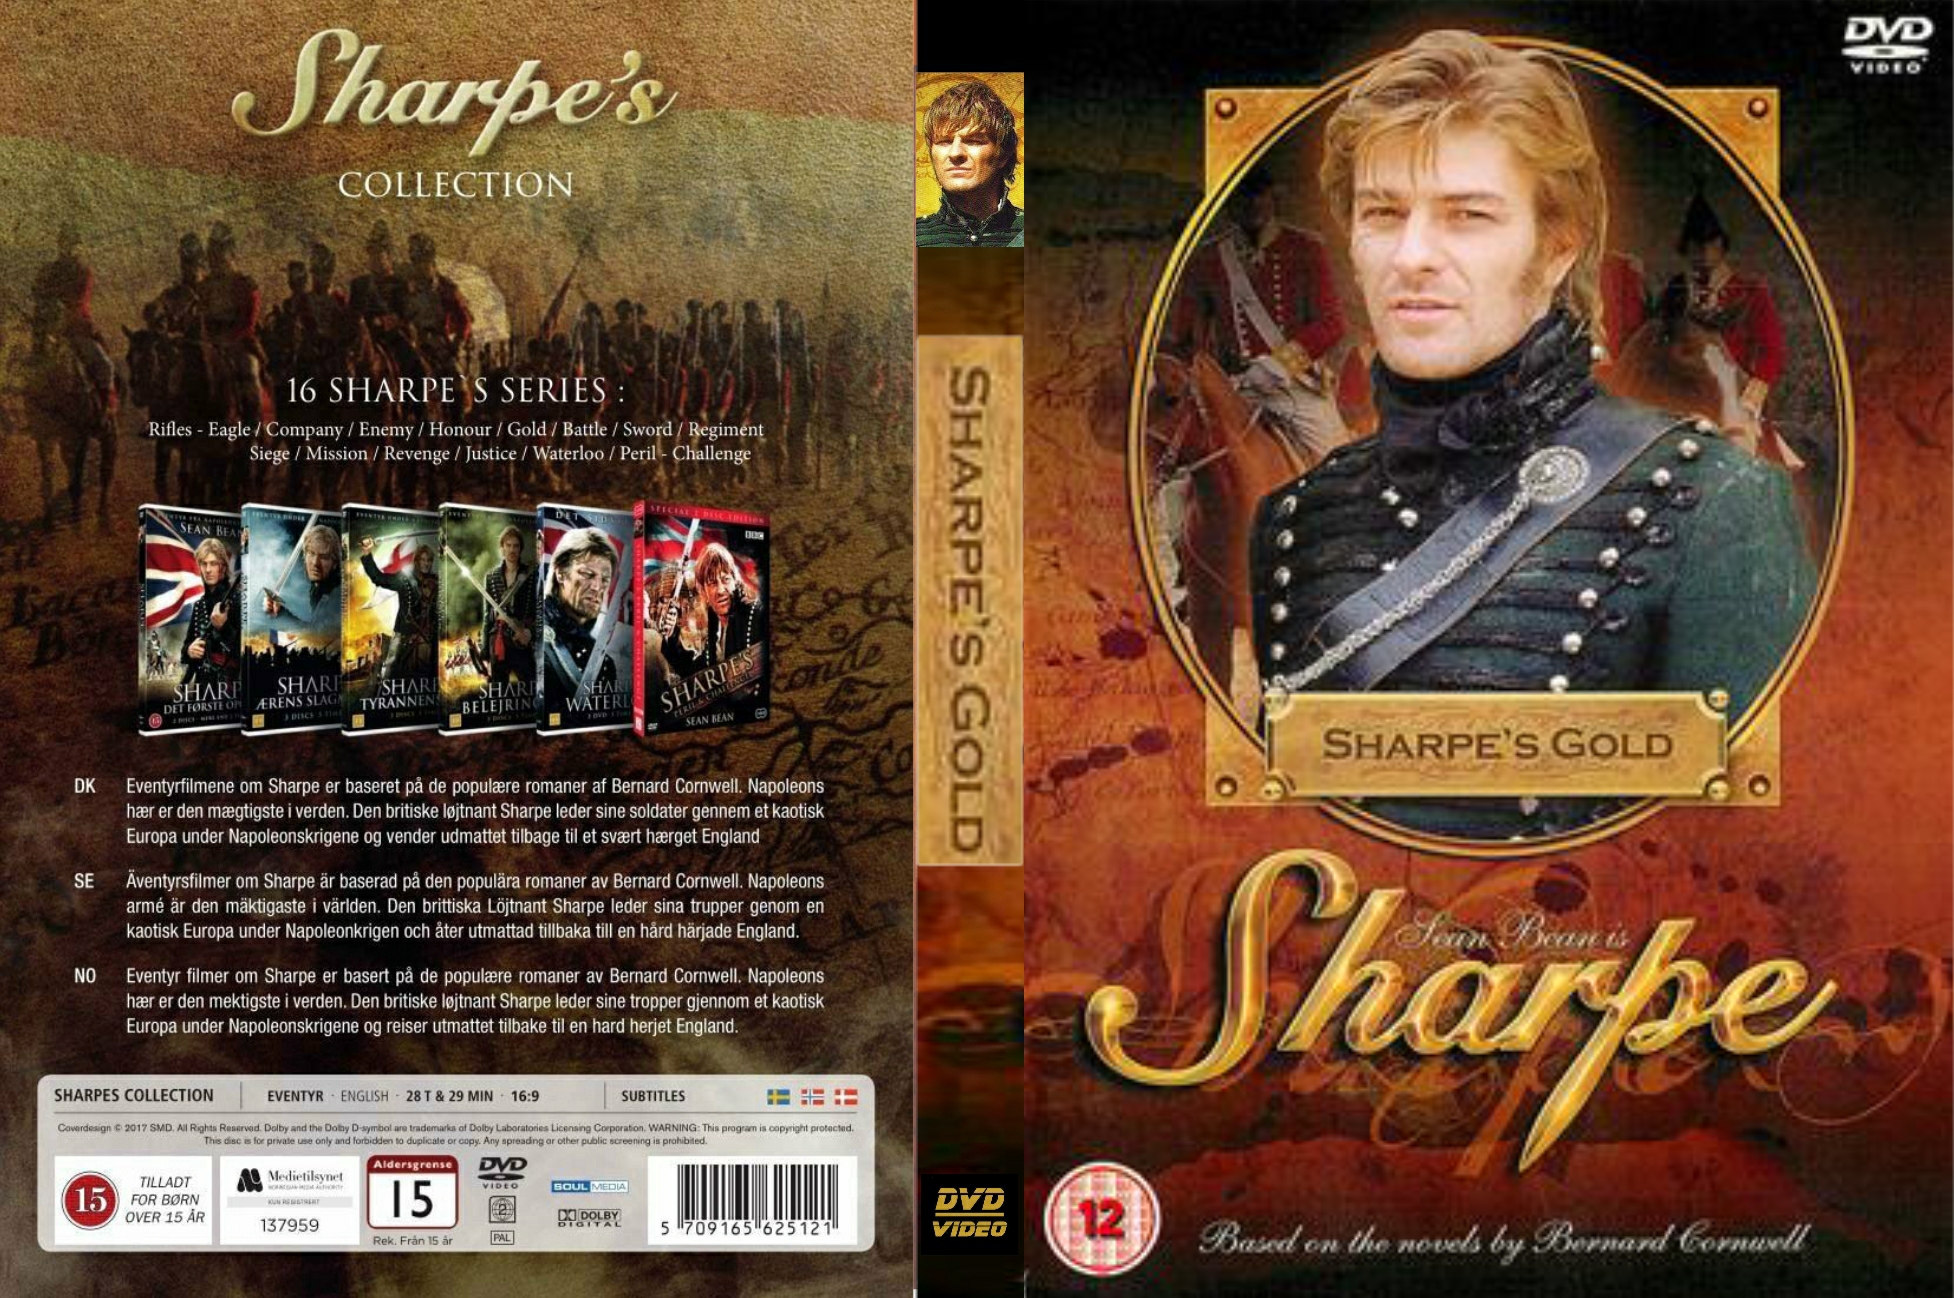 Sharpe's Gold - DvD 6